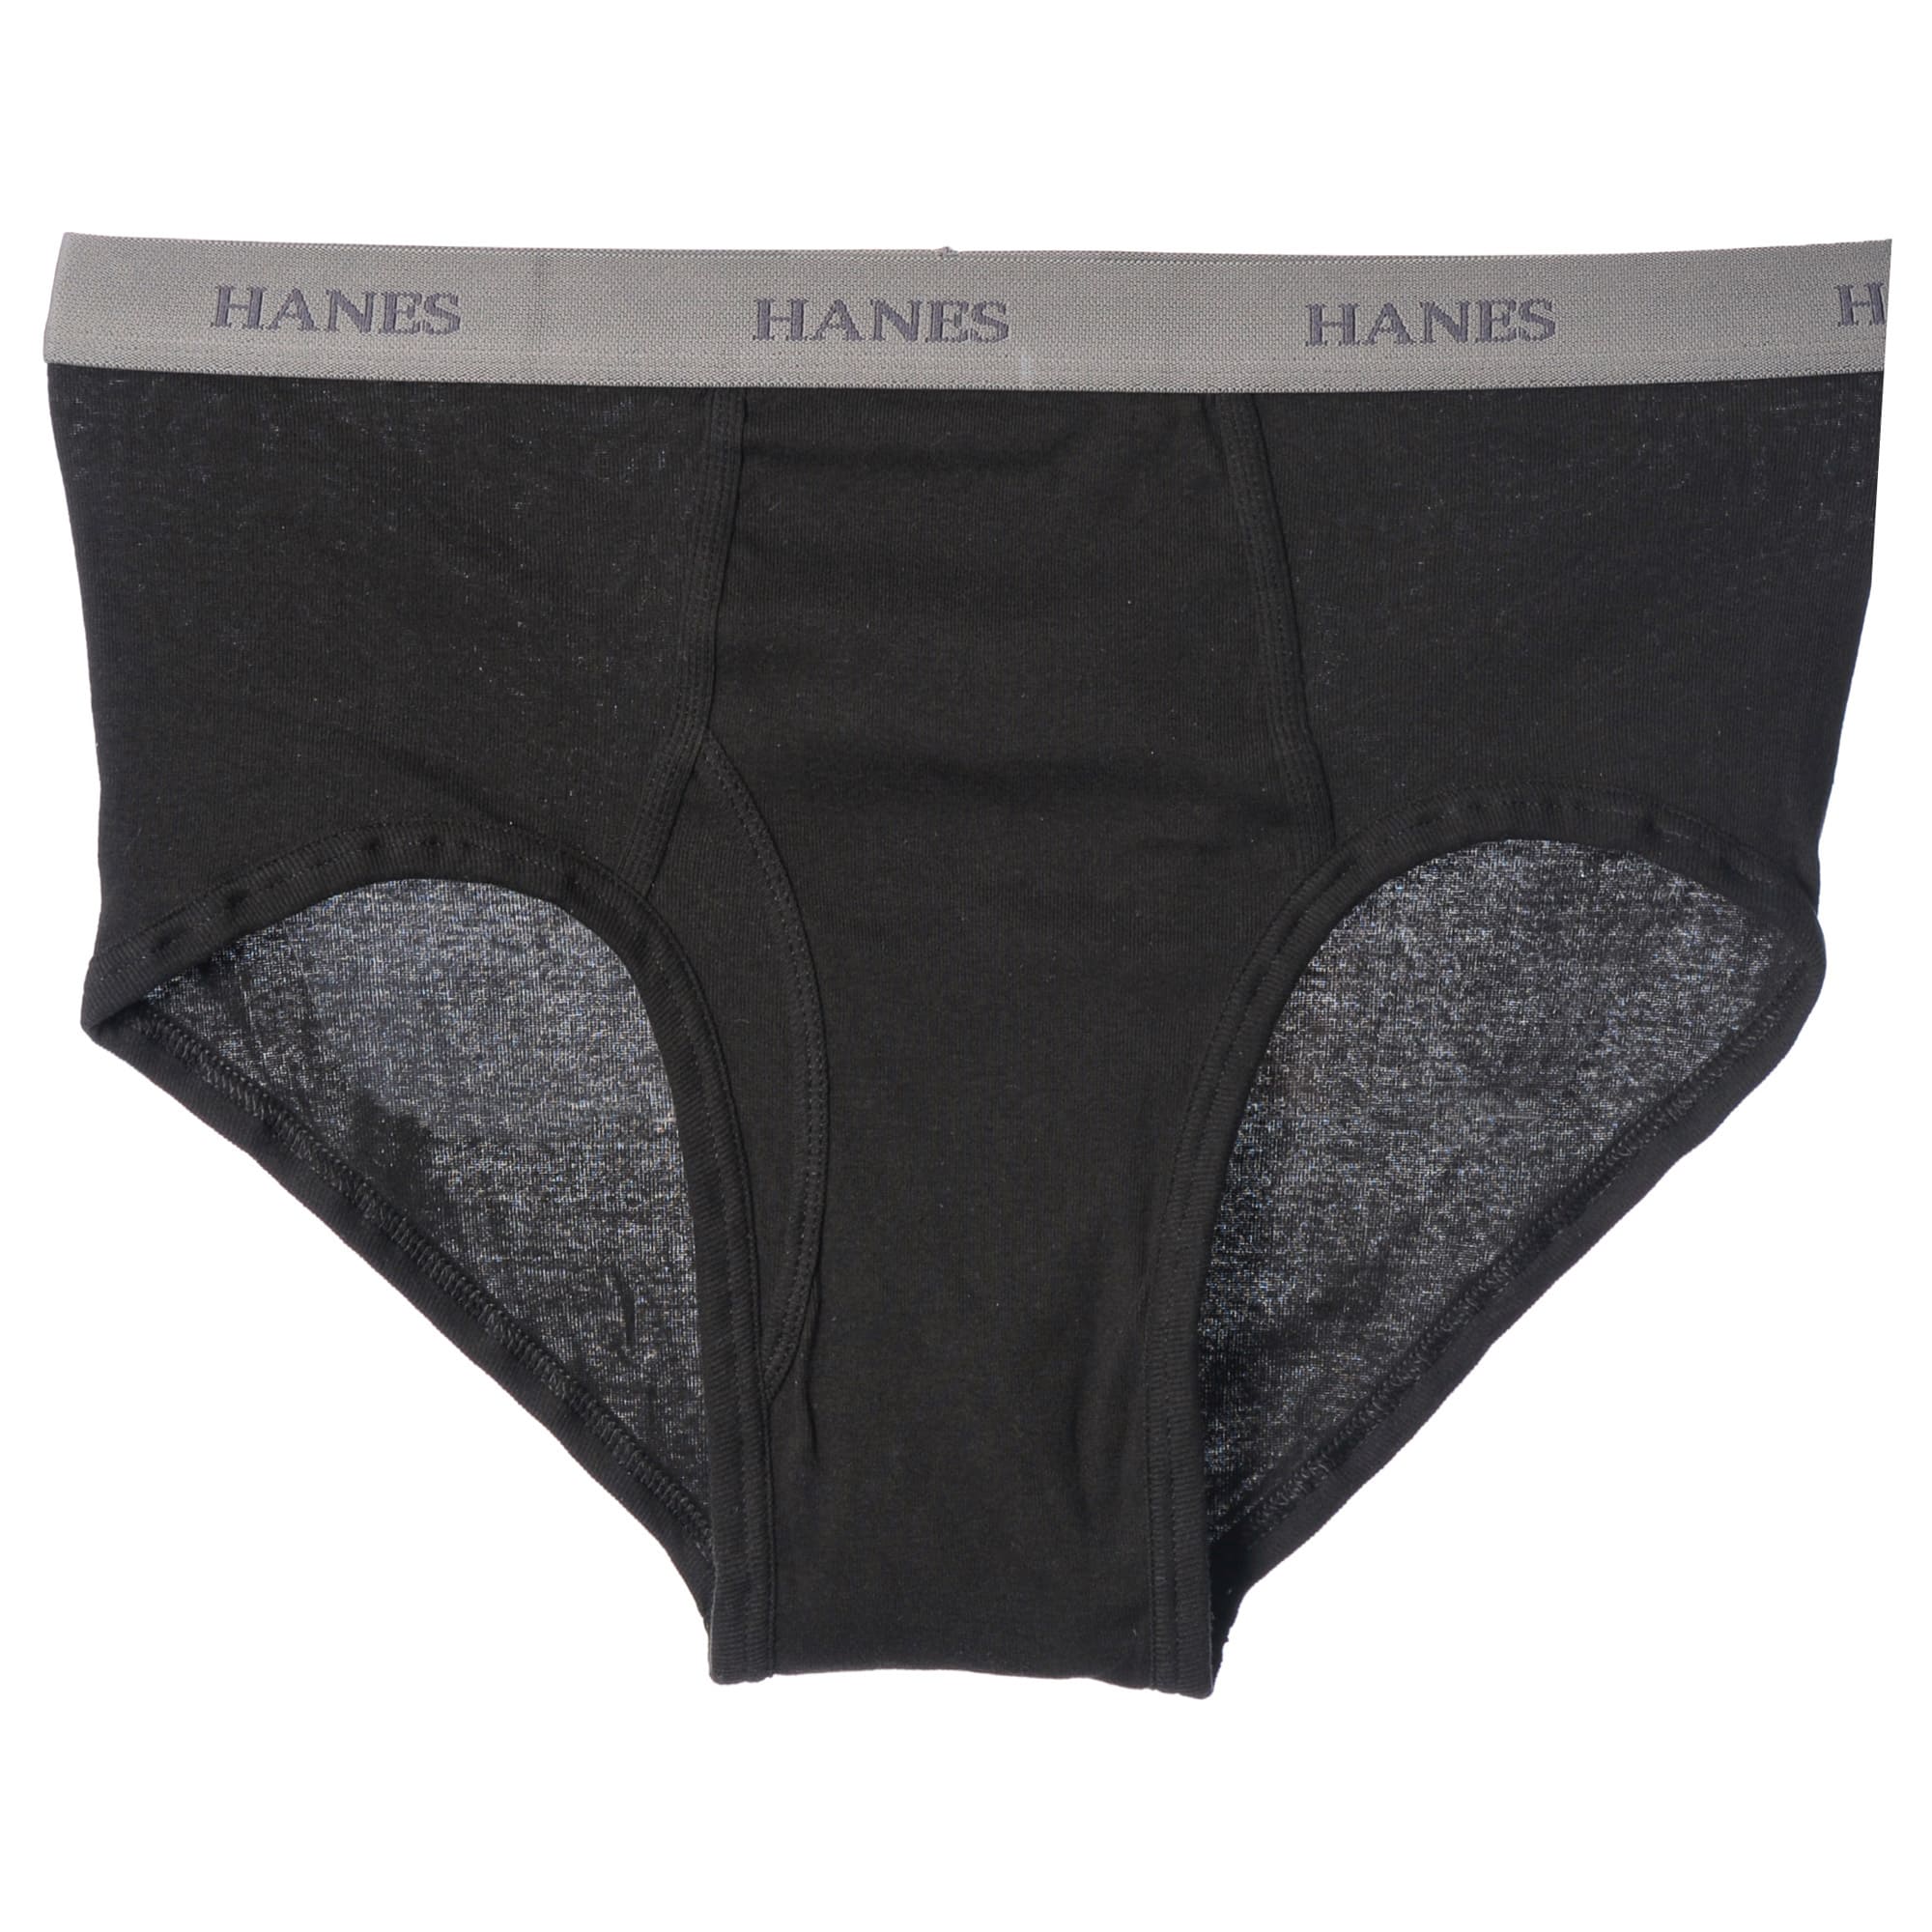 Hanes-Mens-Big-and-Tall-Underwear-3-Pack-Brief-c42377d5-9989-452c-b87c-d6b943cab094.jpg